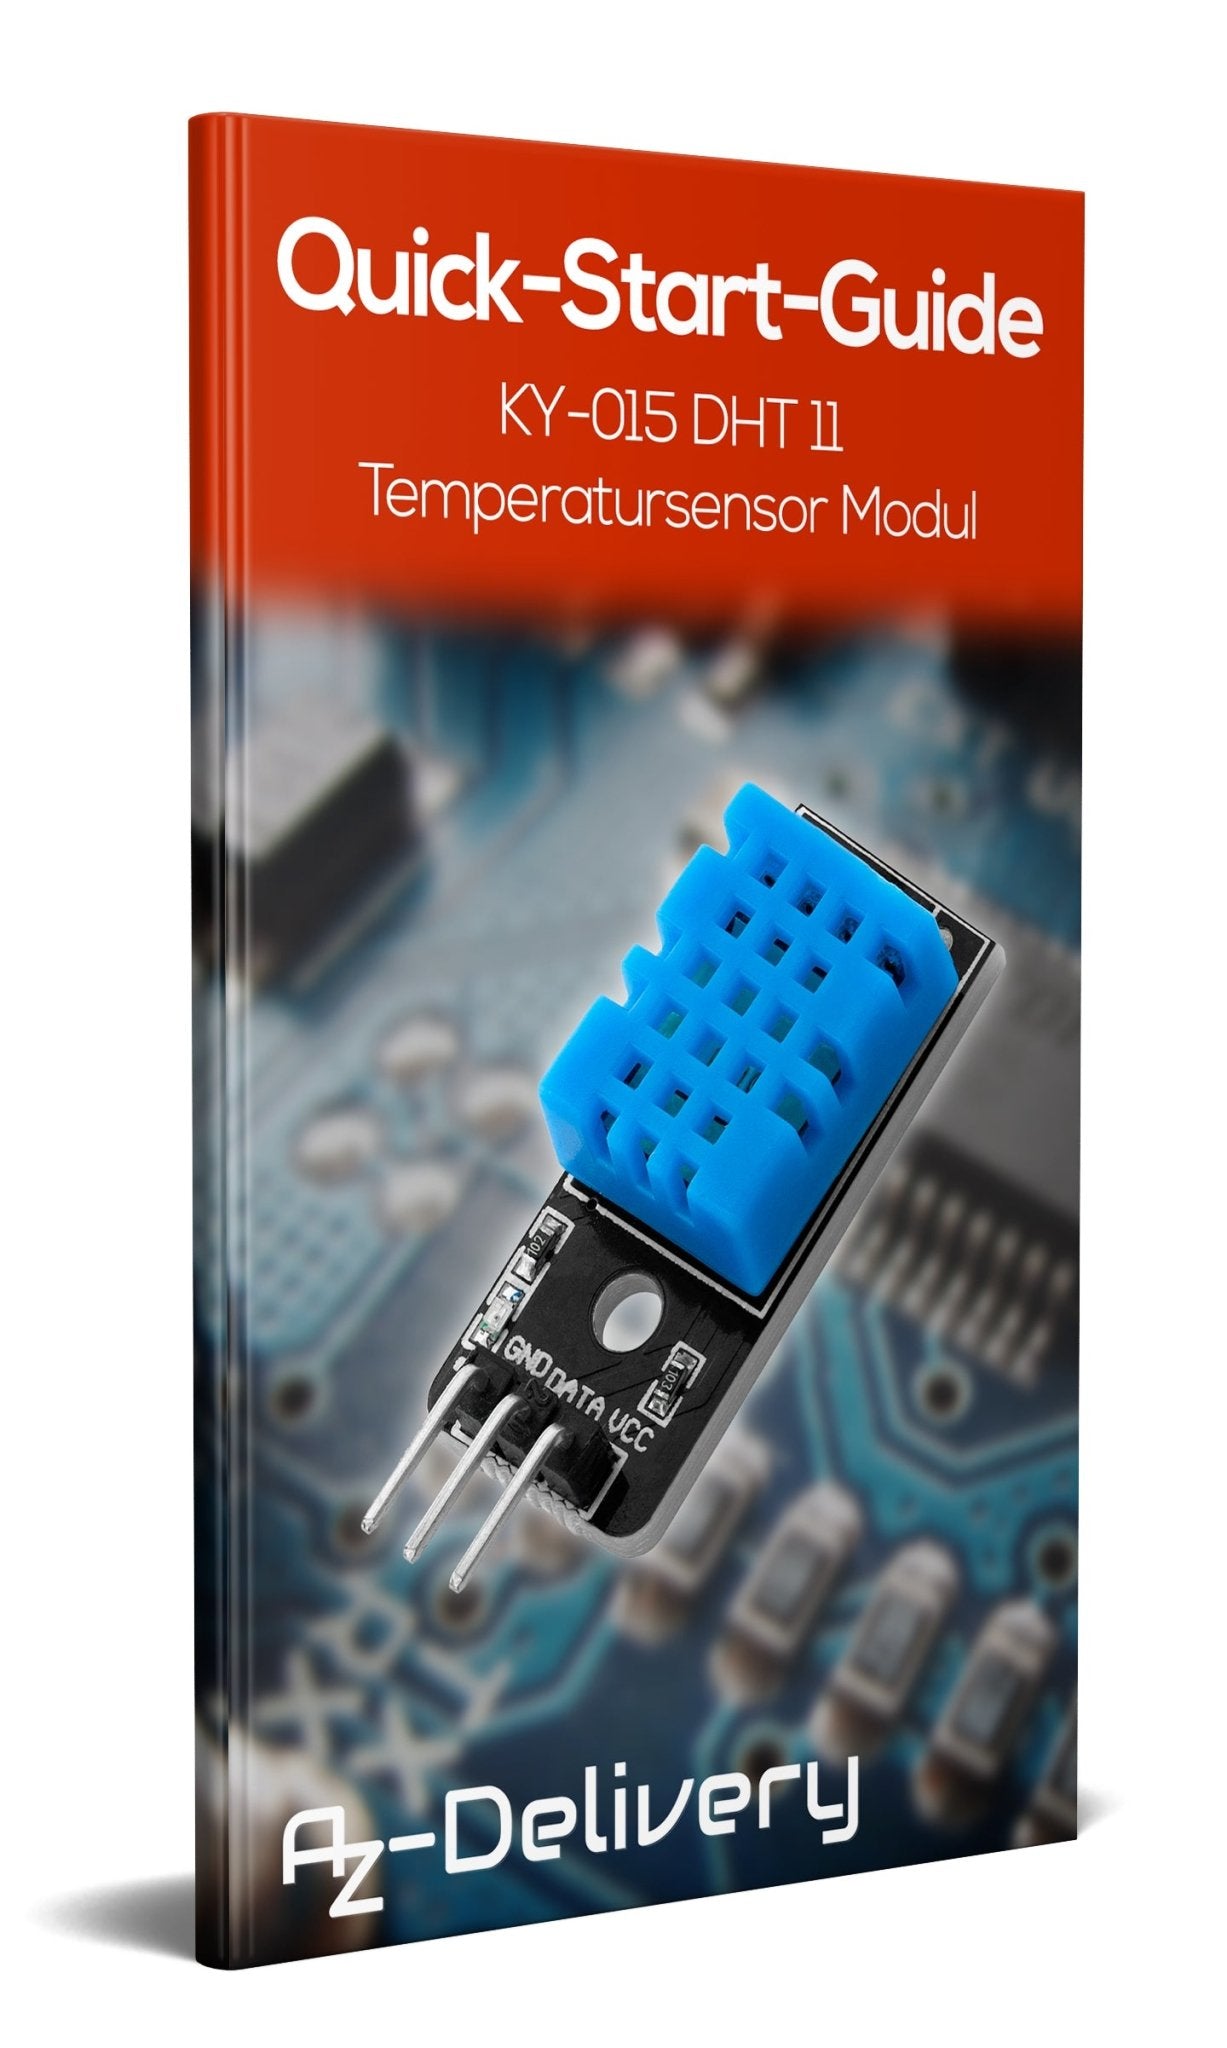 KY-015 DHT 11 Temperatursensor Modul - AZ-Delivery